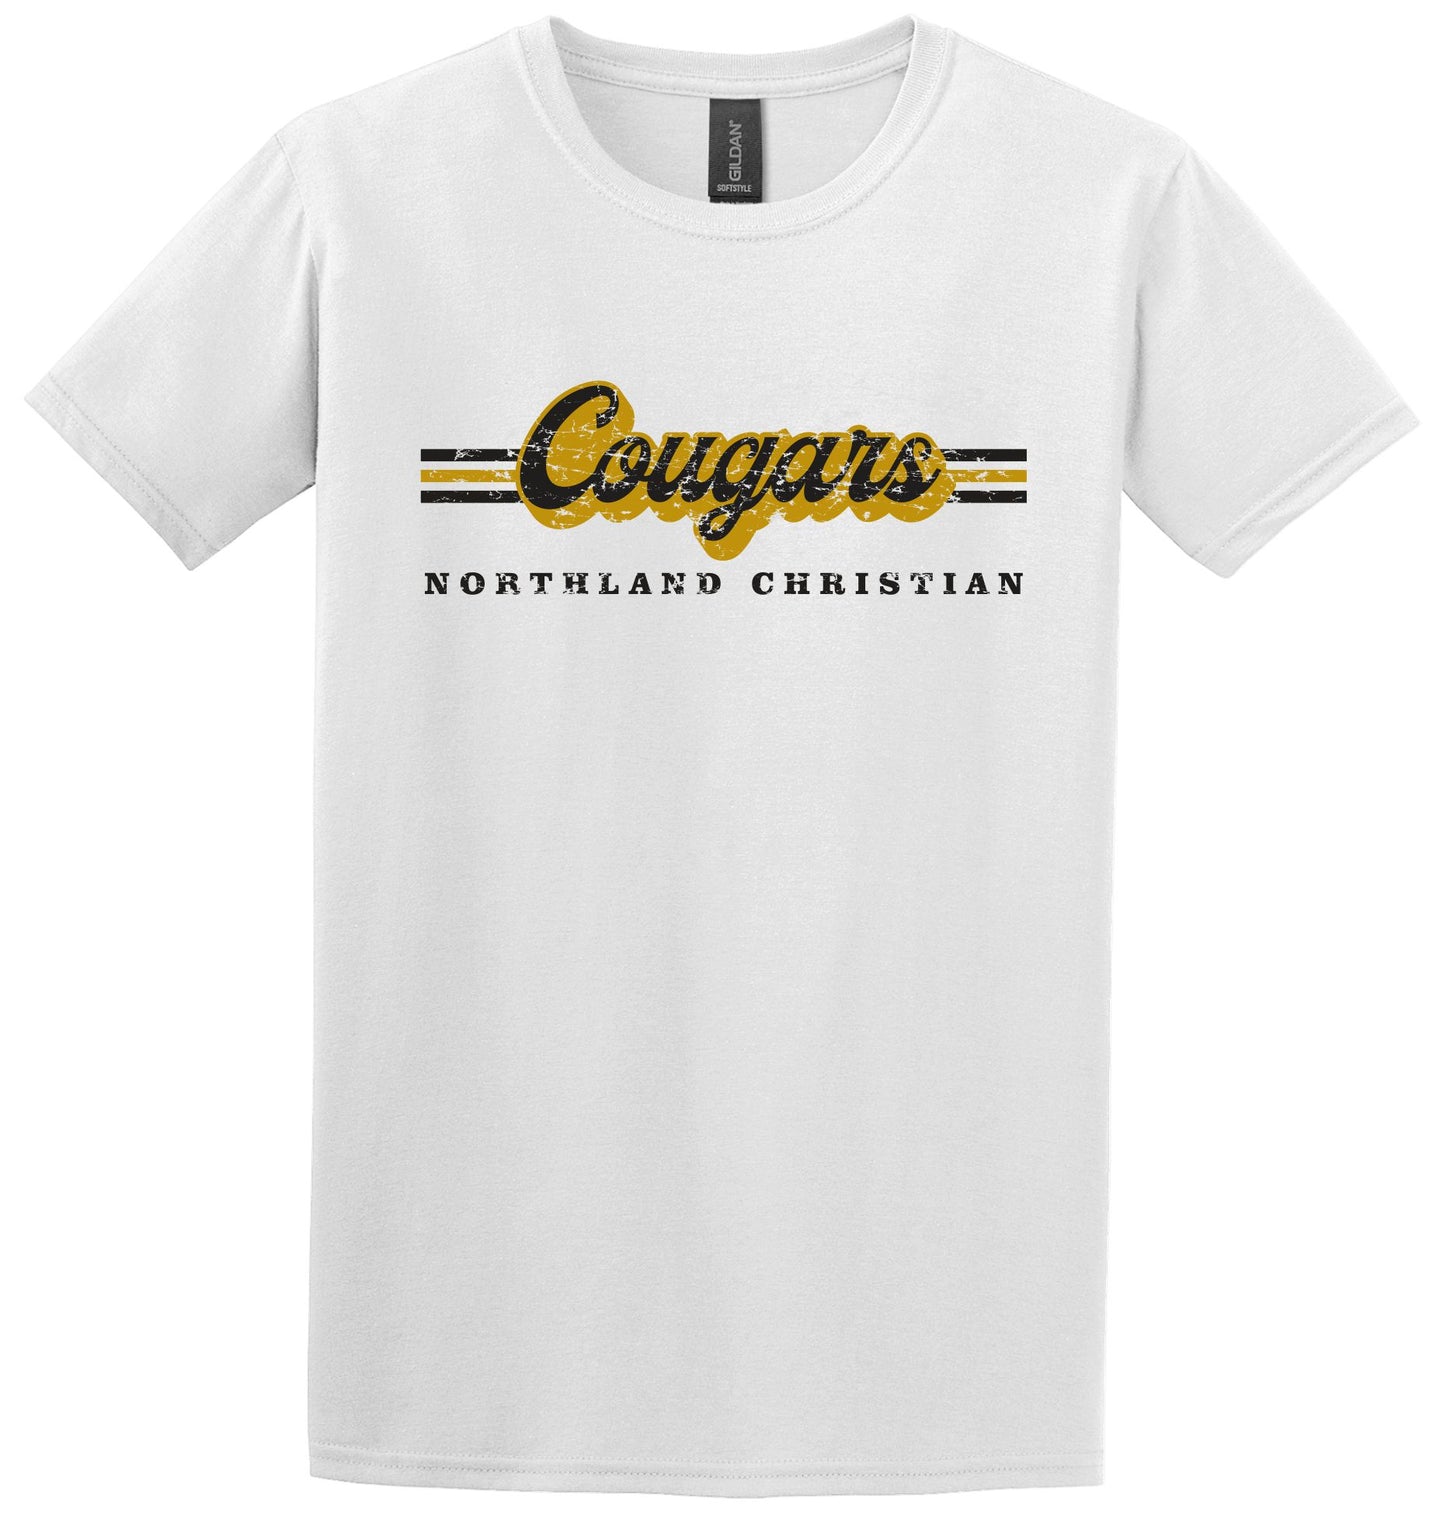 NC Cougars T Shirt - White